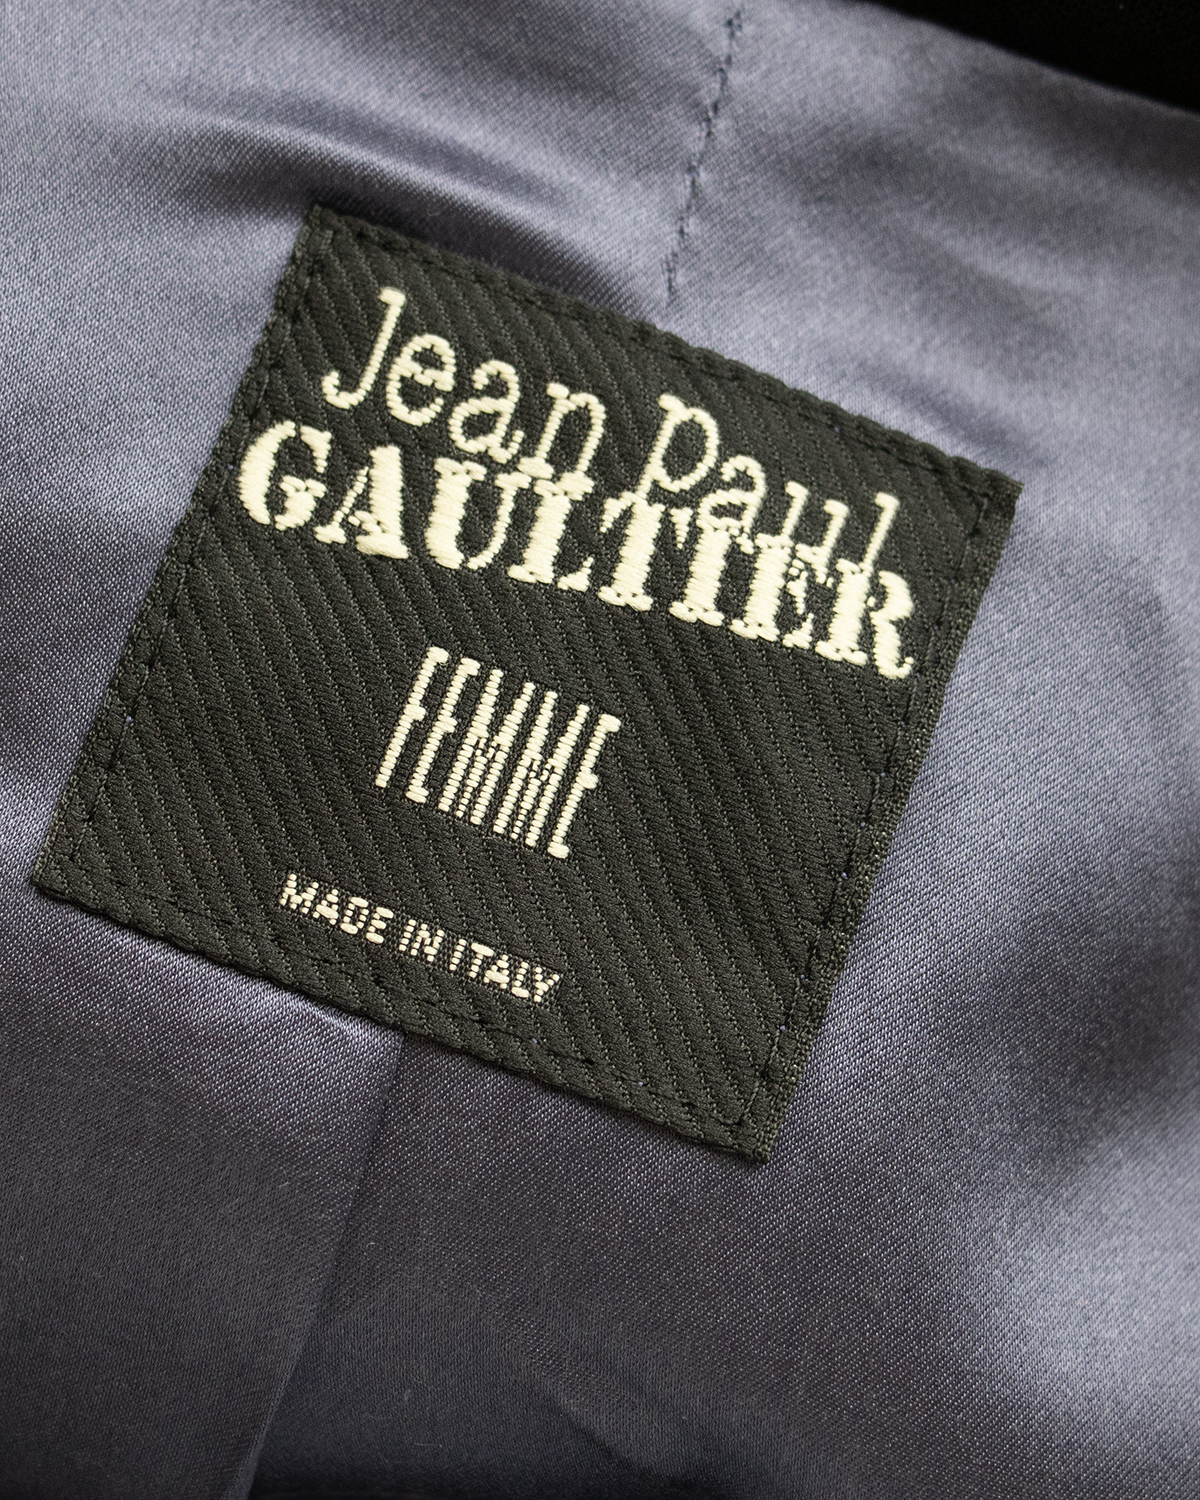 Jean Paul Gaultier Sailor Black Jacket from 1990s